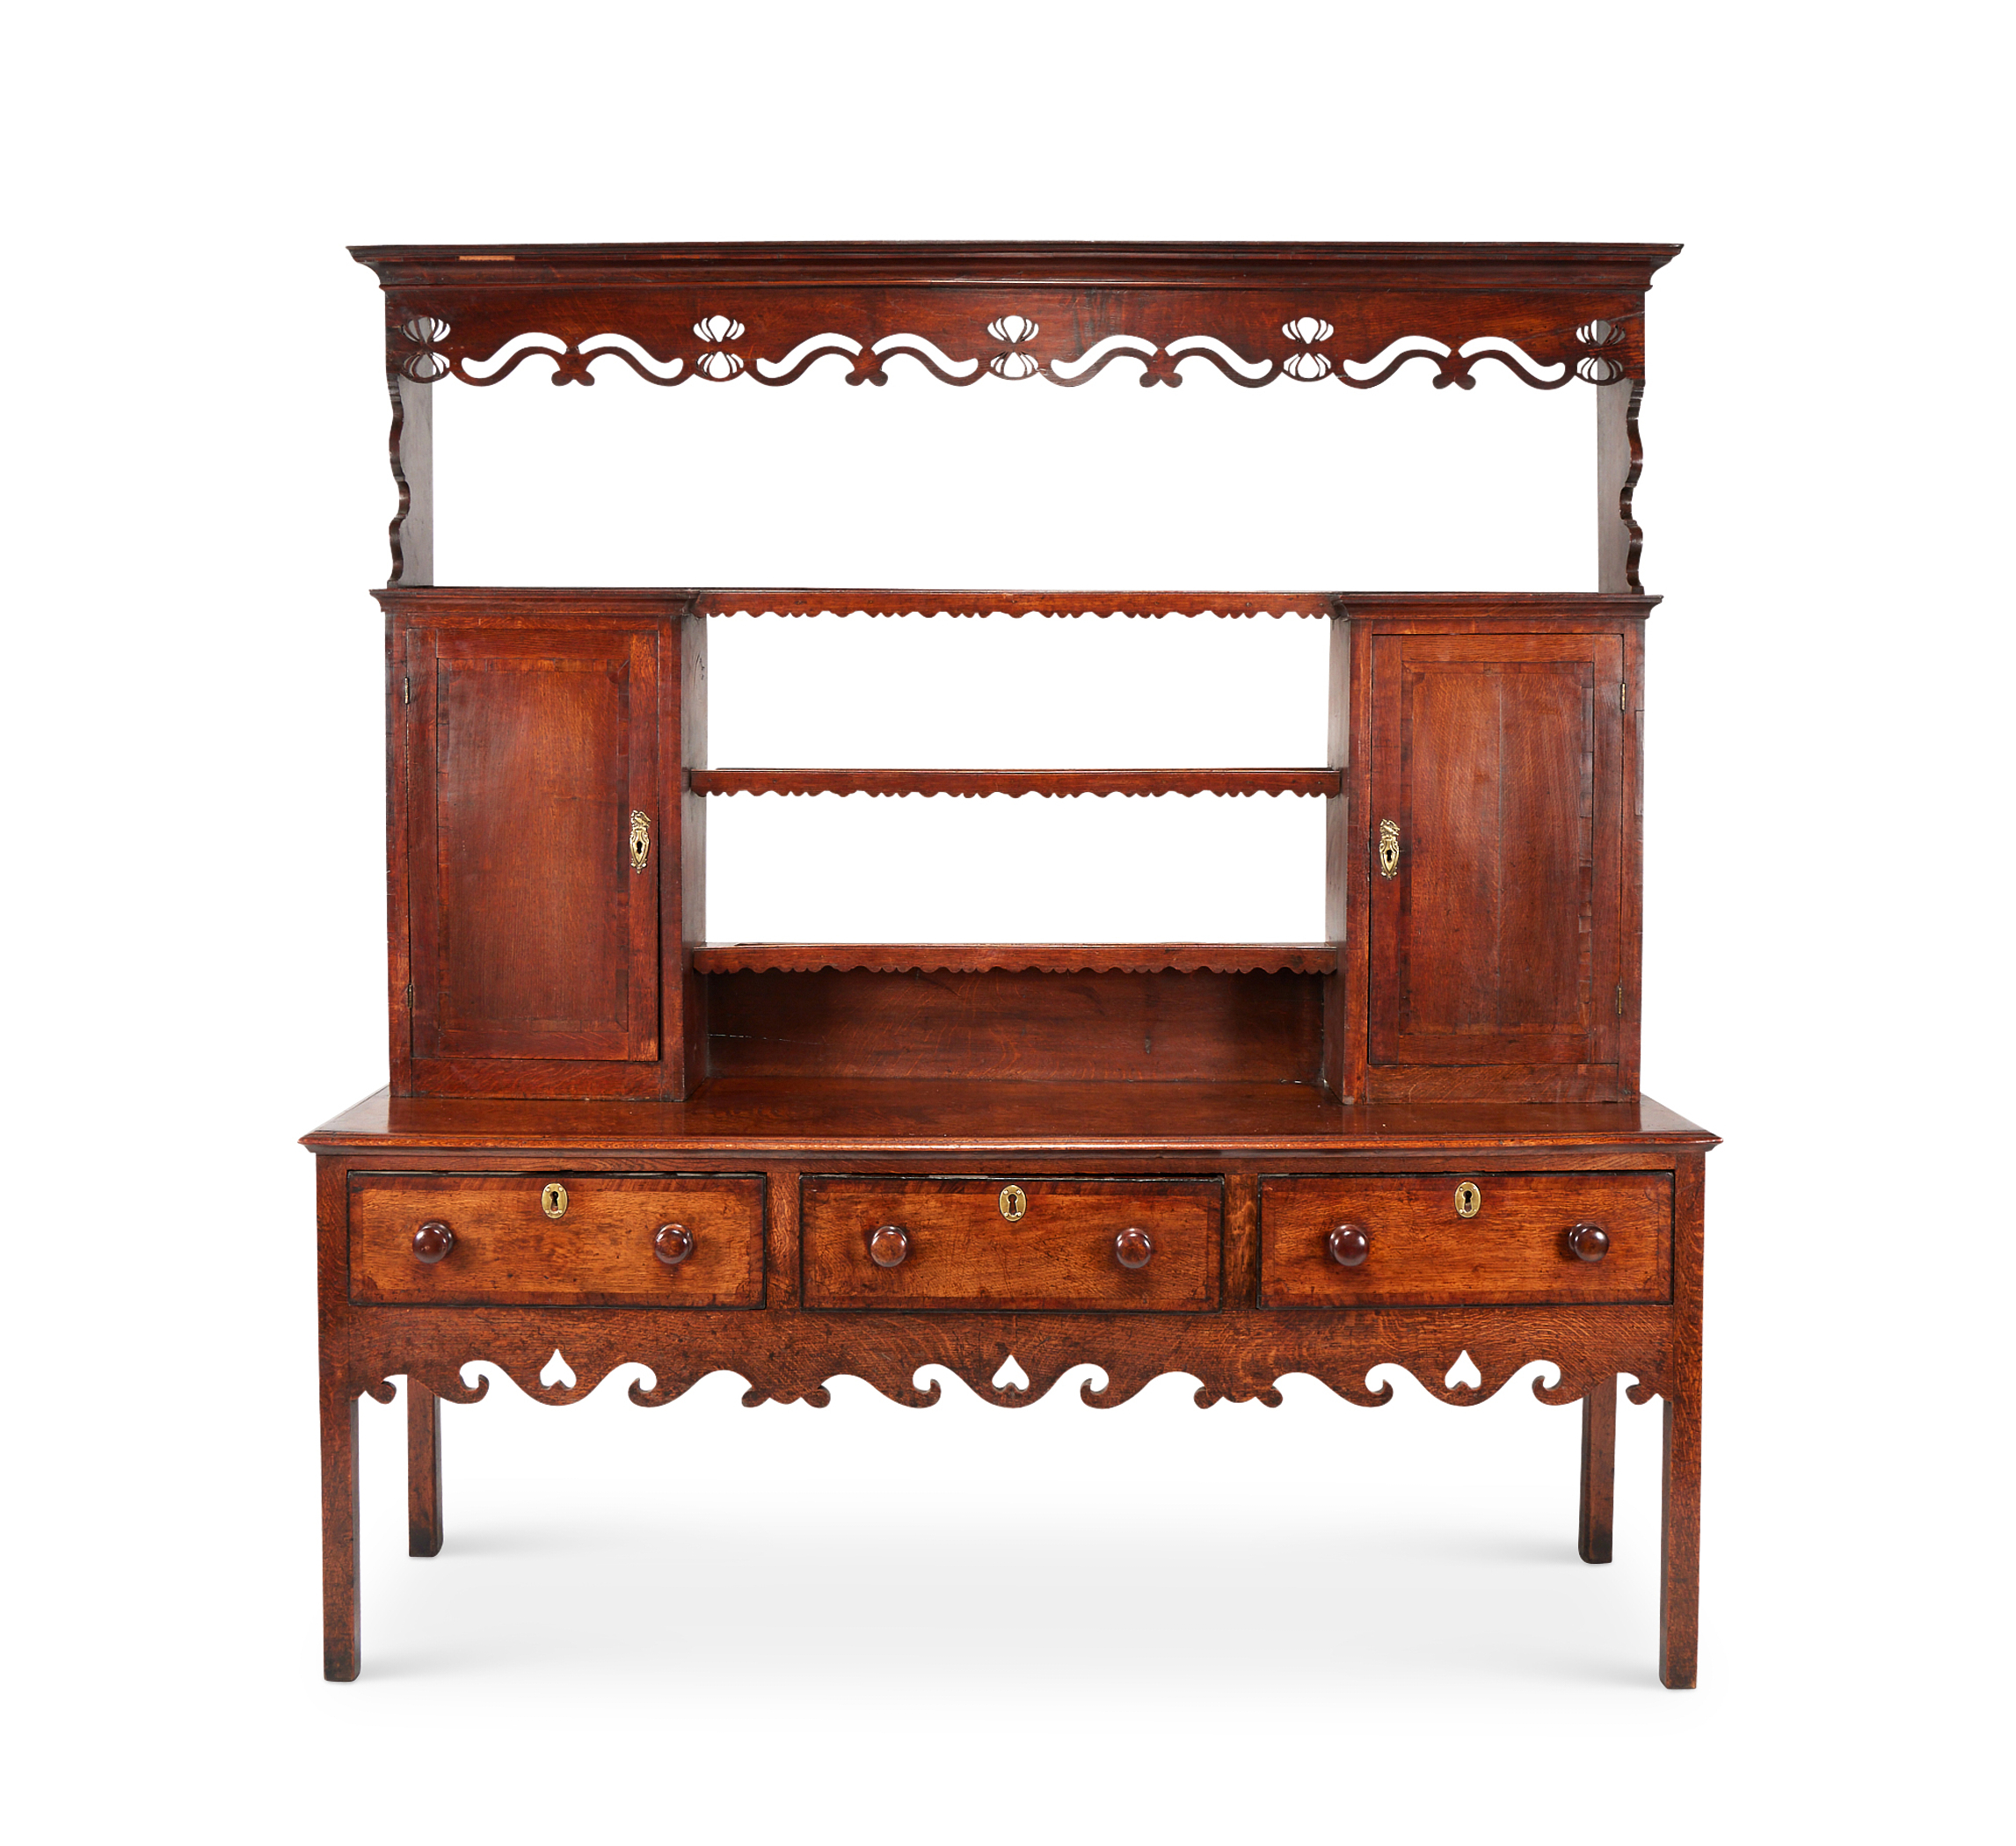 An 18th century oak and mahogany crossbanded dresser